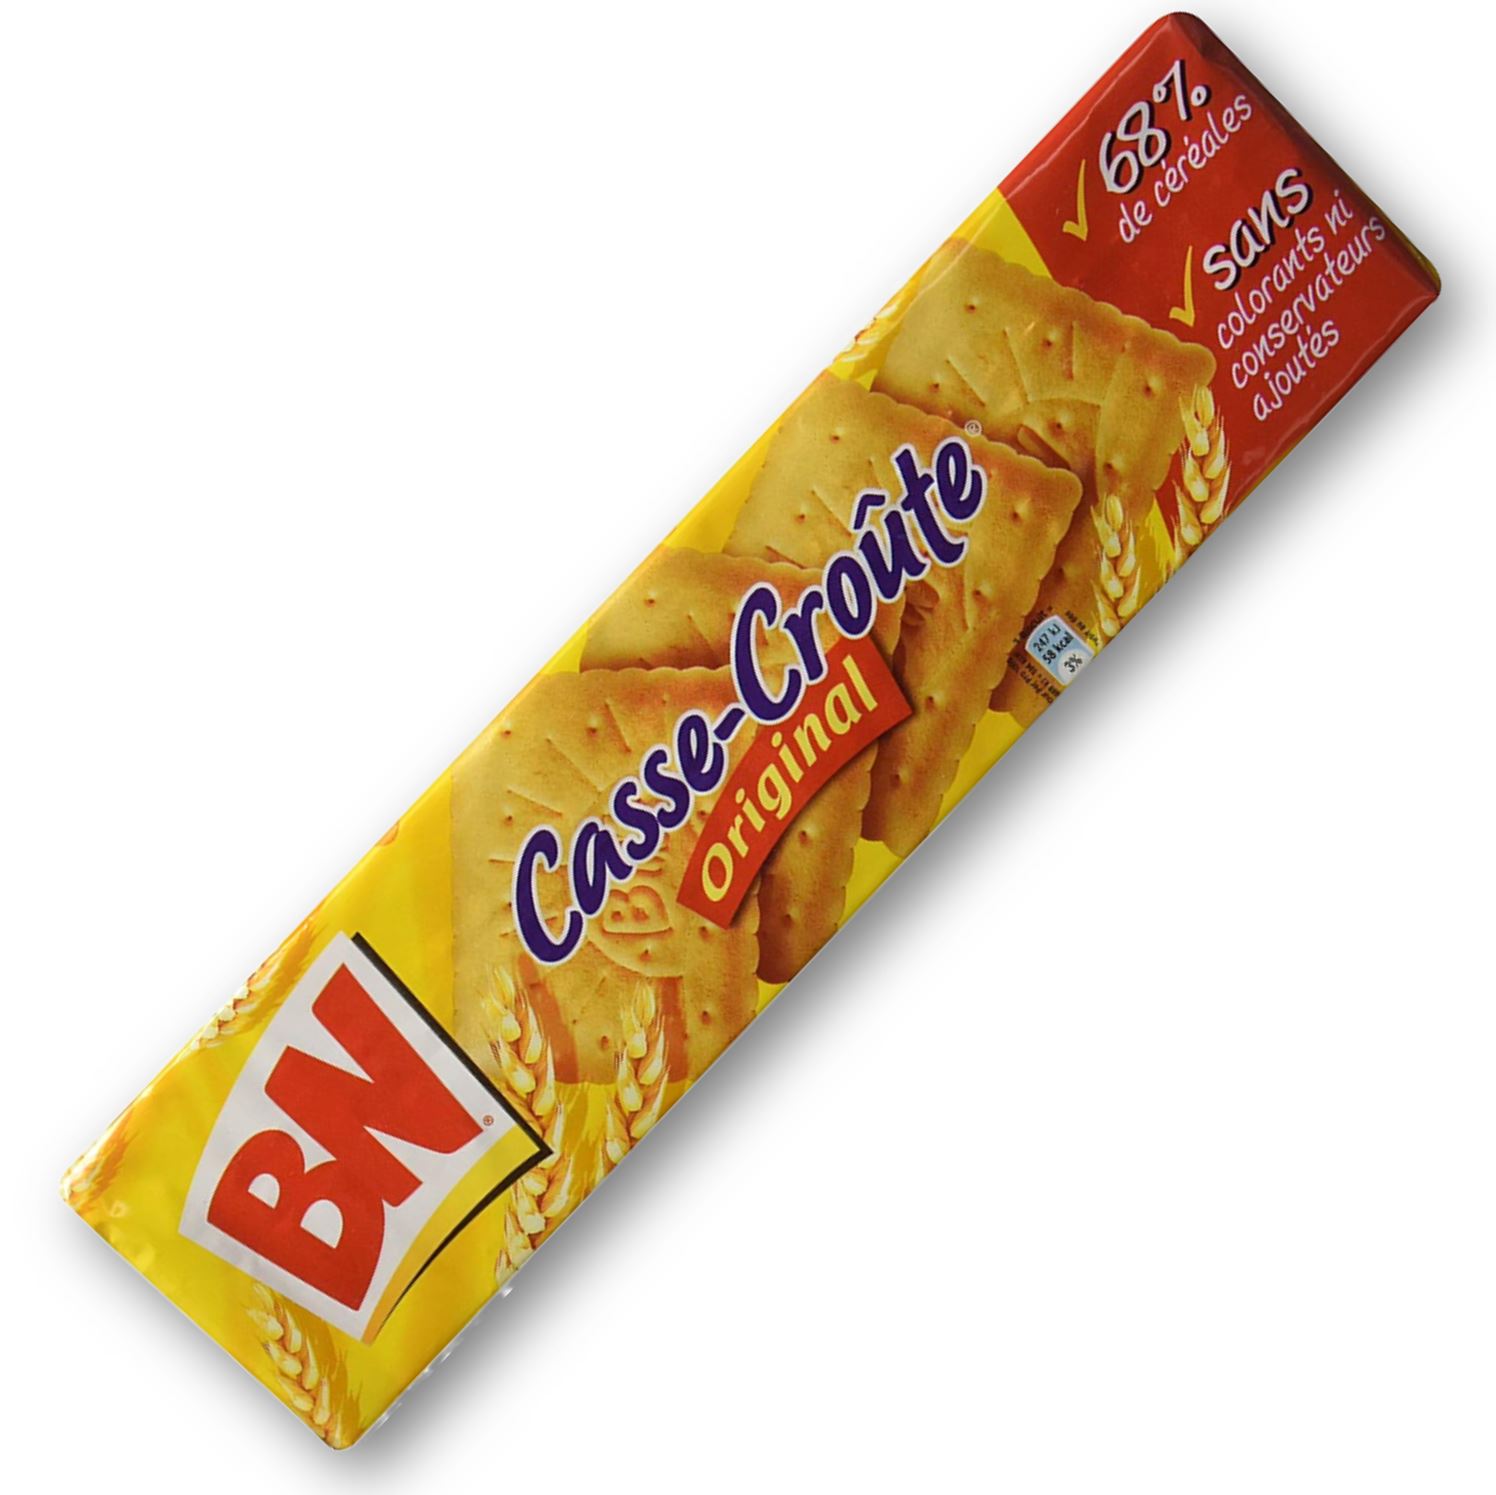 Biscuits Casse-Croûte Original